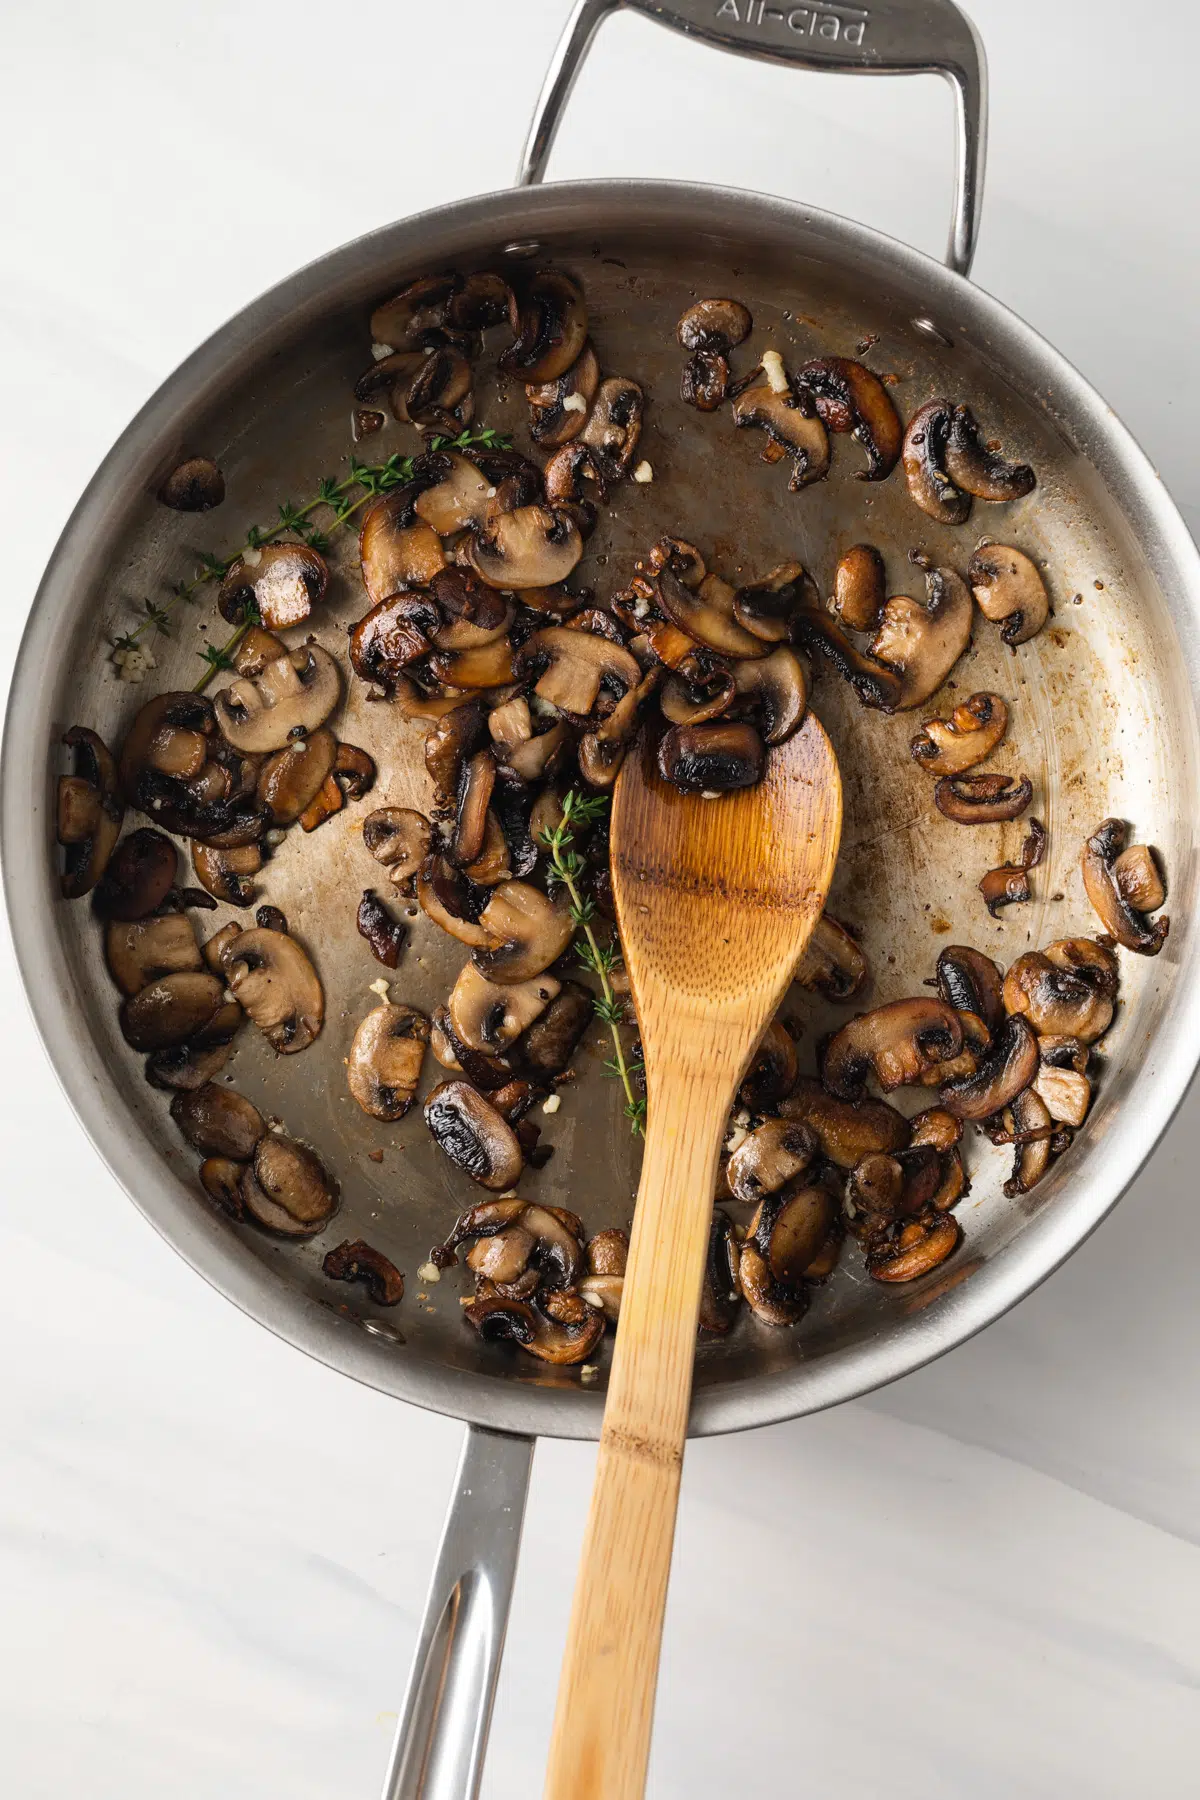 Sauteed mushrooms in a fry pan.